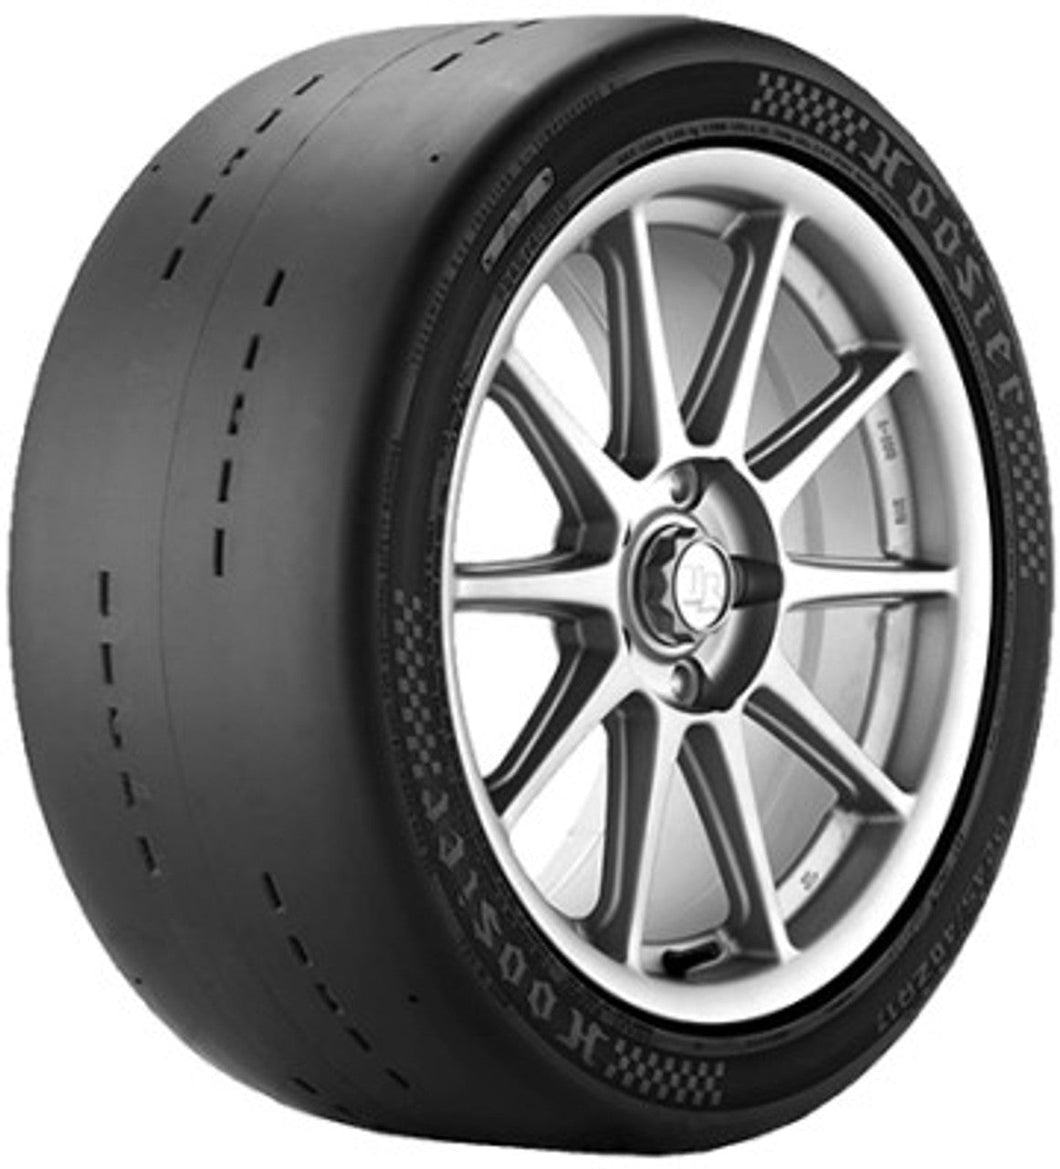 275/45 ZR16 Hoosier Tire Slick D.O.T Neumático